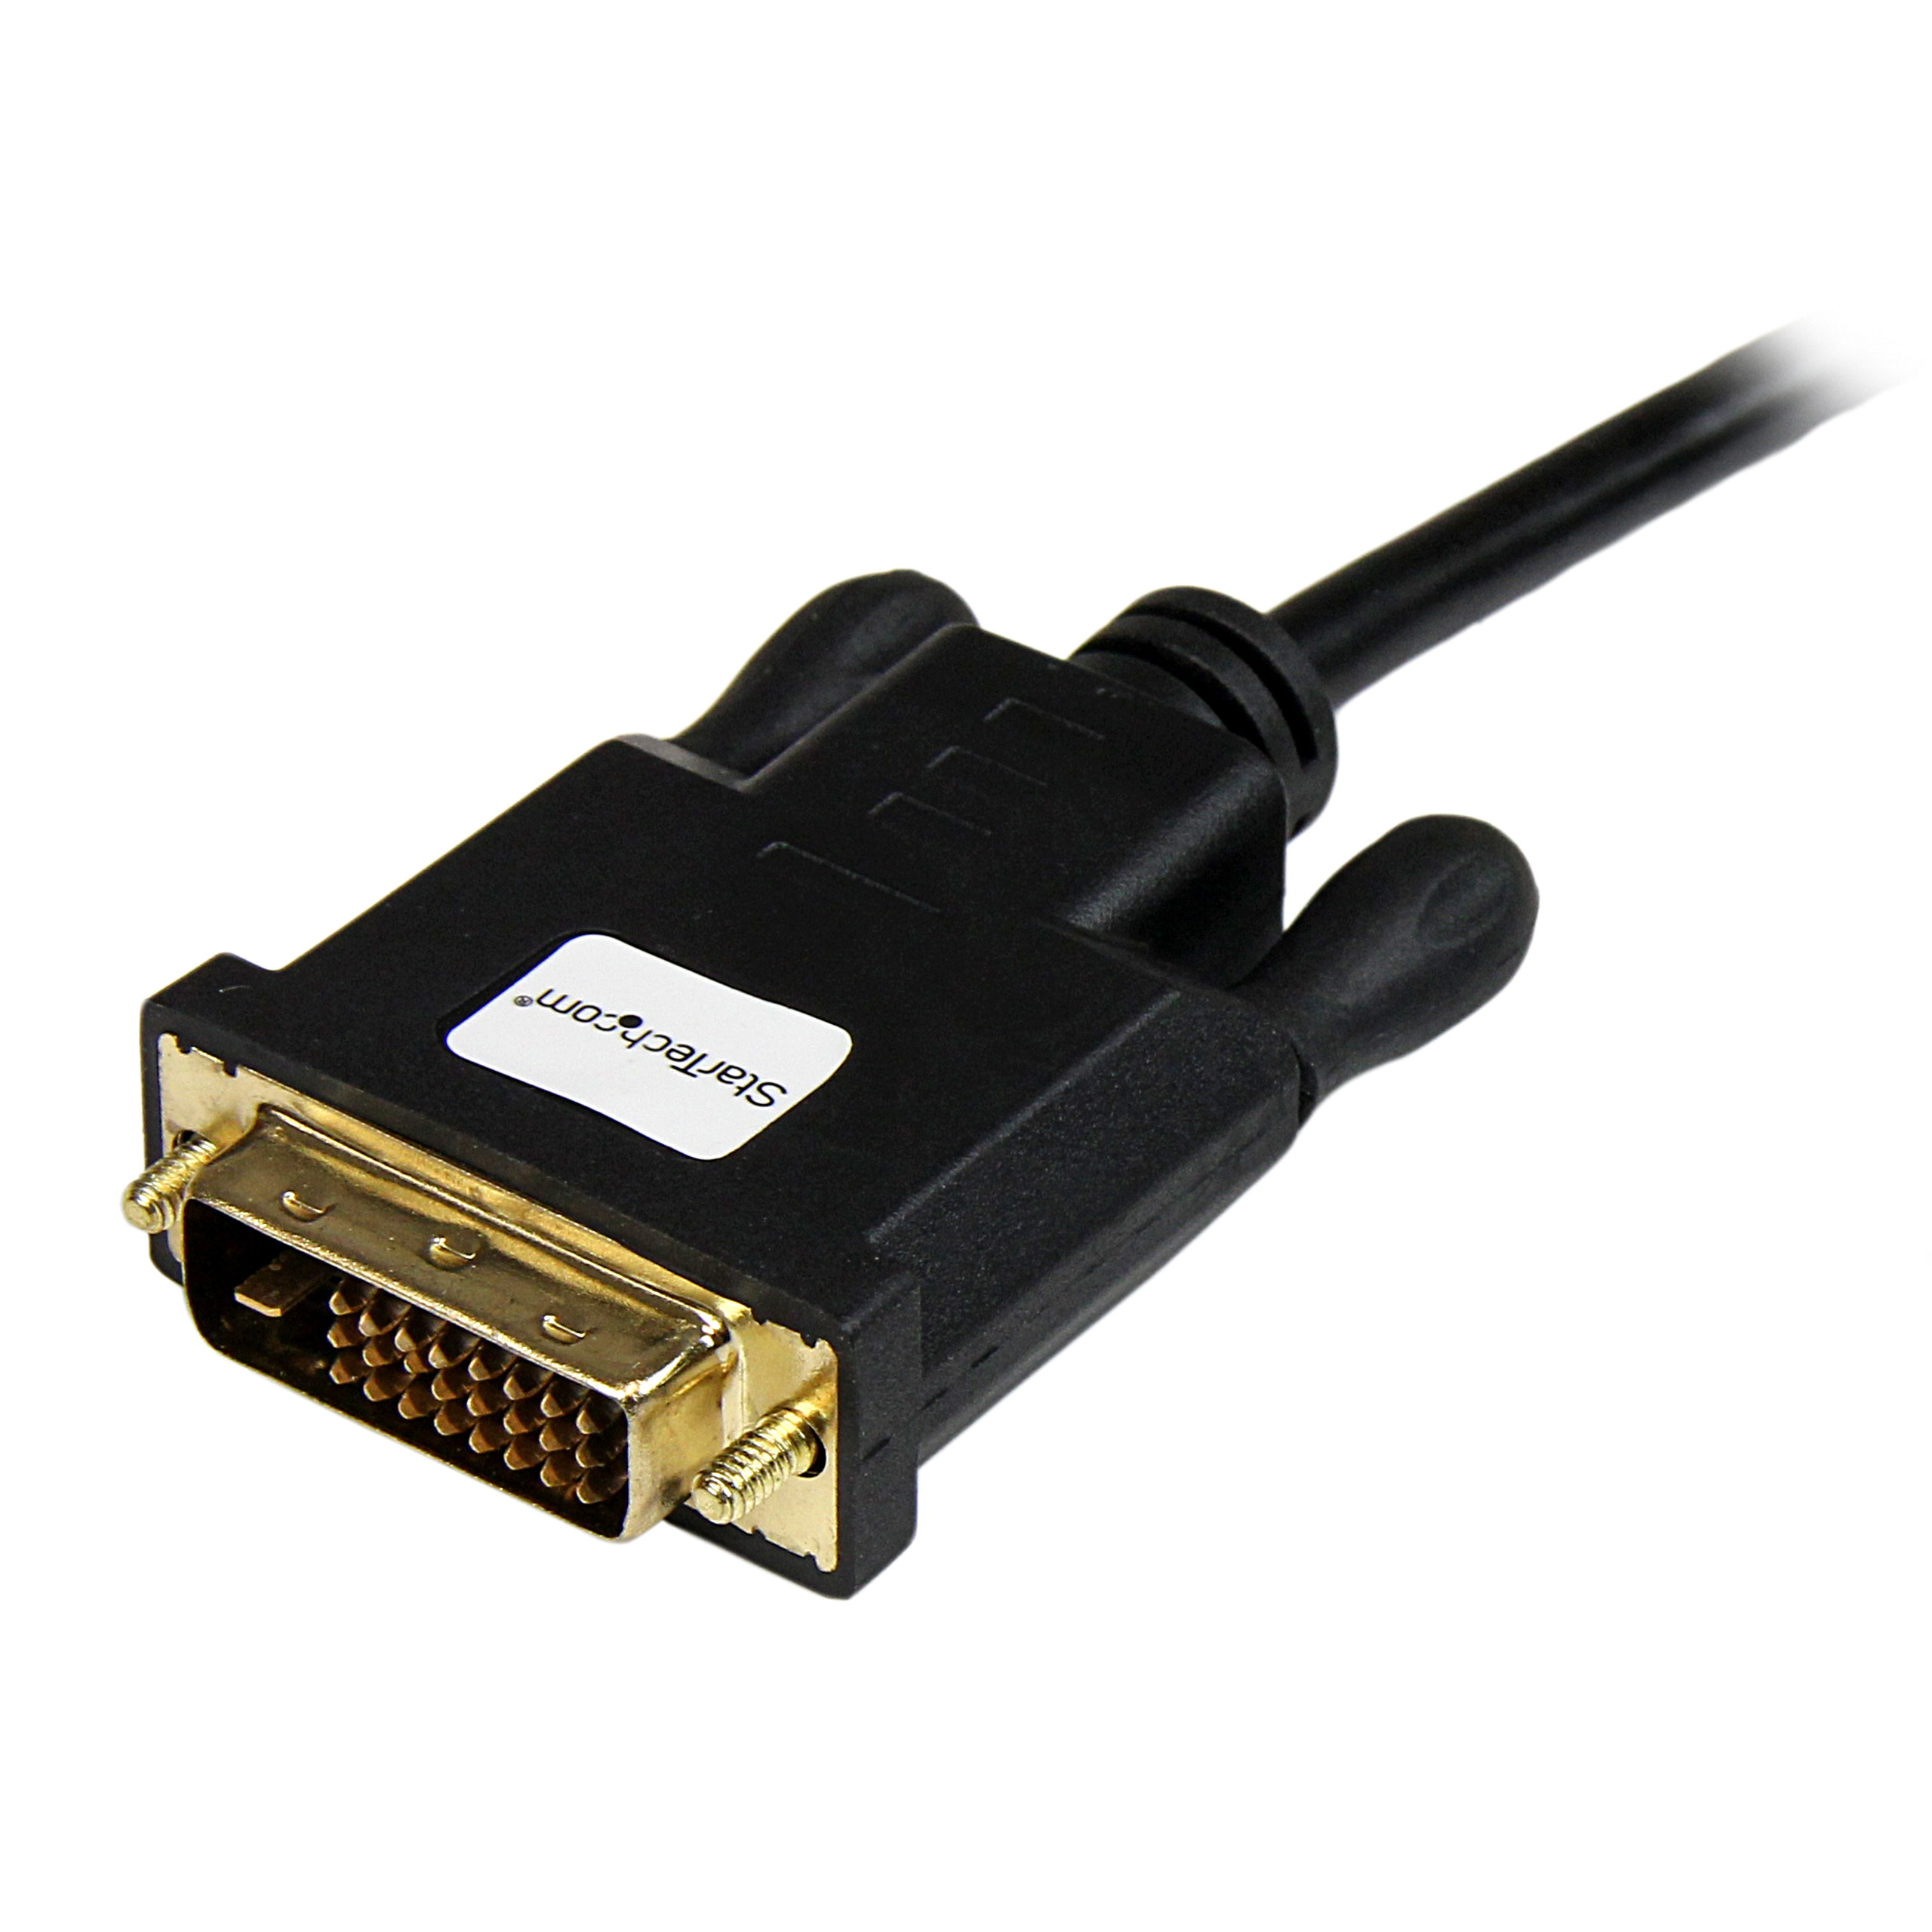 Cabling - CABLING® Adaptateur Thunderbolt/Mini DisplayPort Vers DVI & VGA  &HDMI - Adapteur Câble 3 en 1 pour Mac Book, iMac, Mac Book Air, Mac Book  Pro et Mac mini - Câble